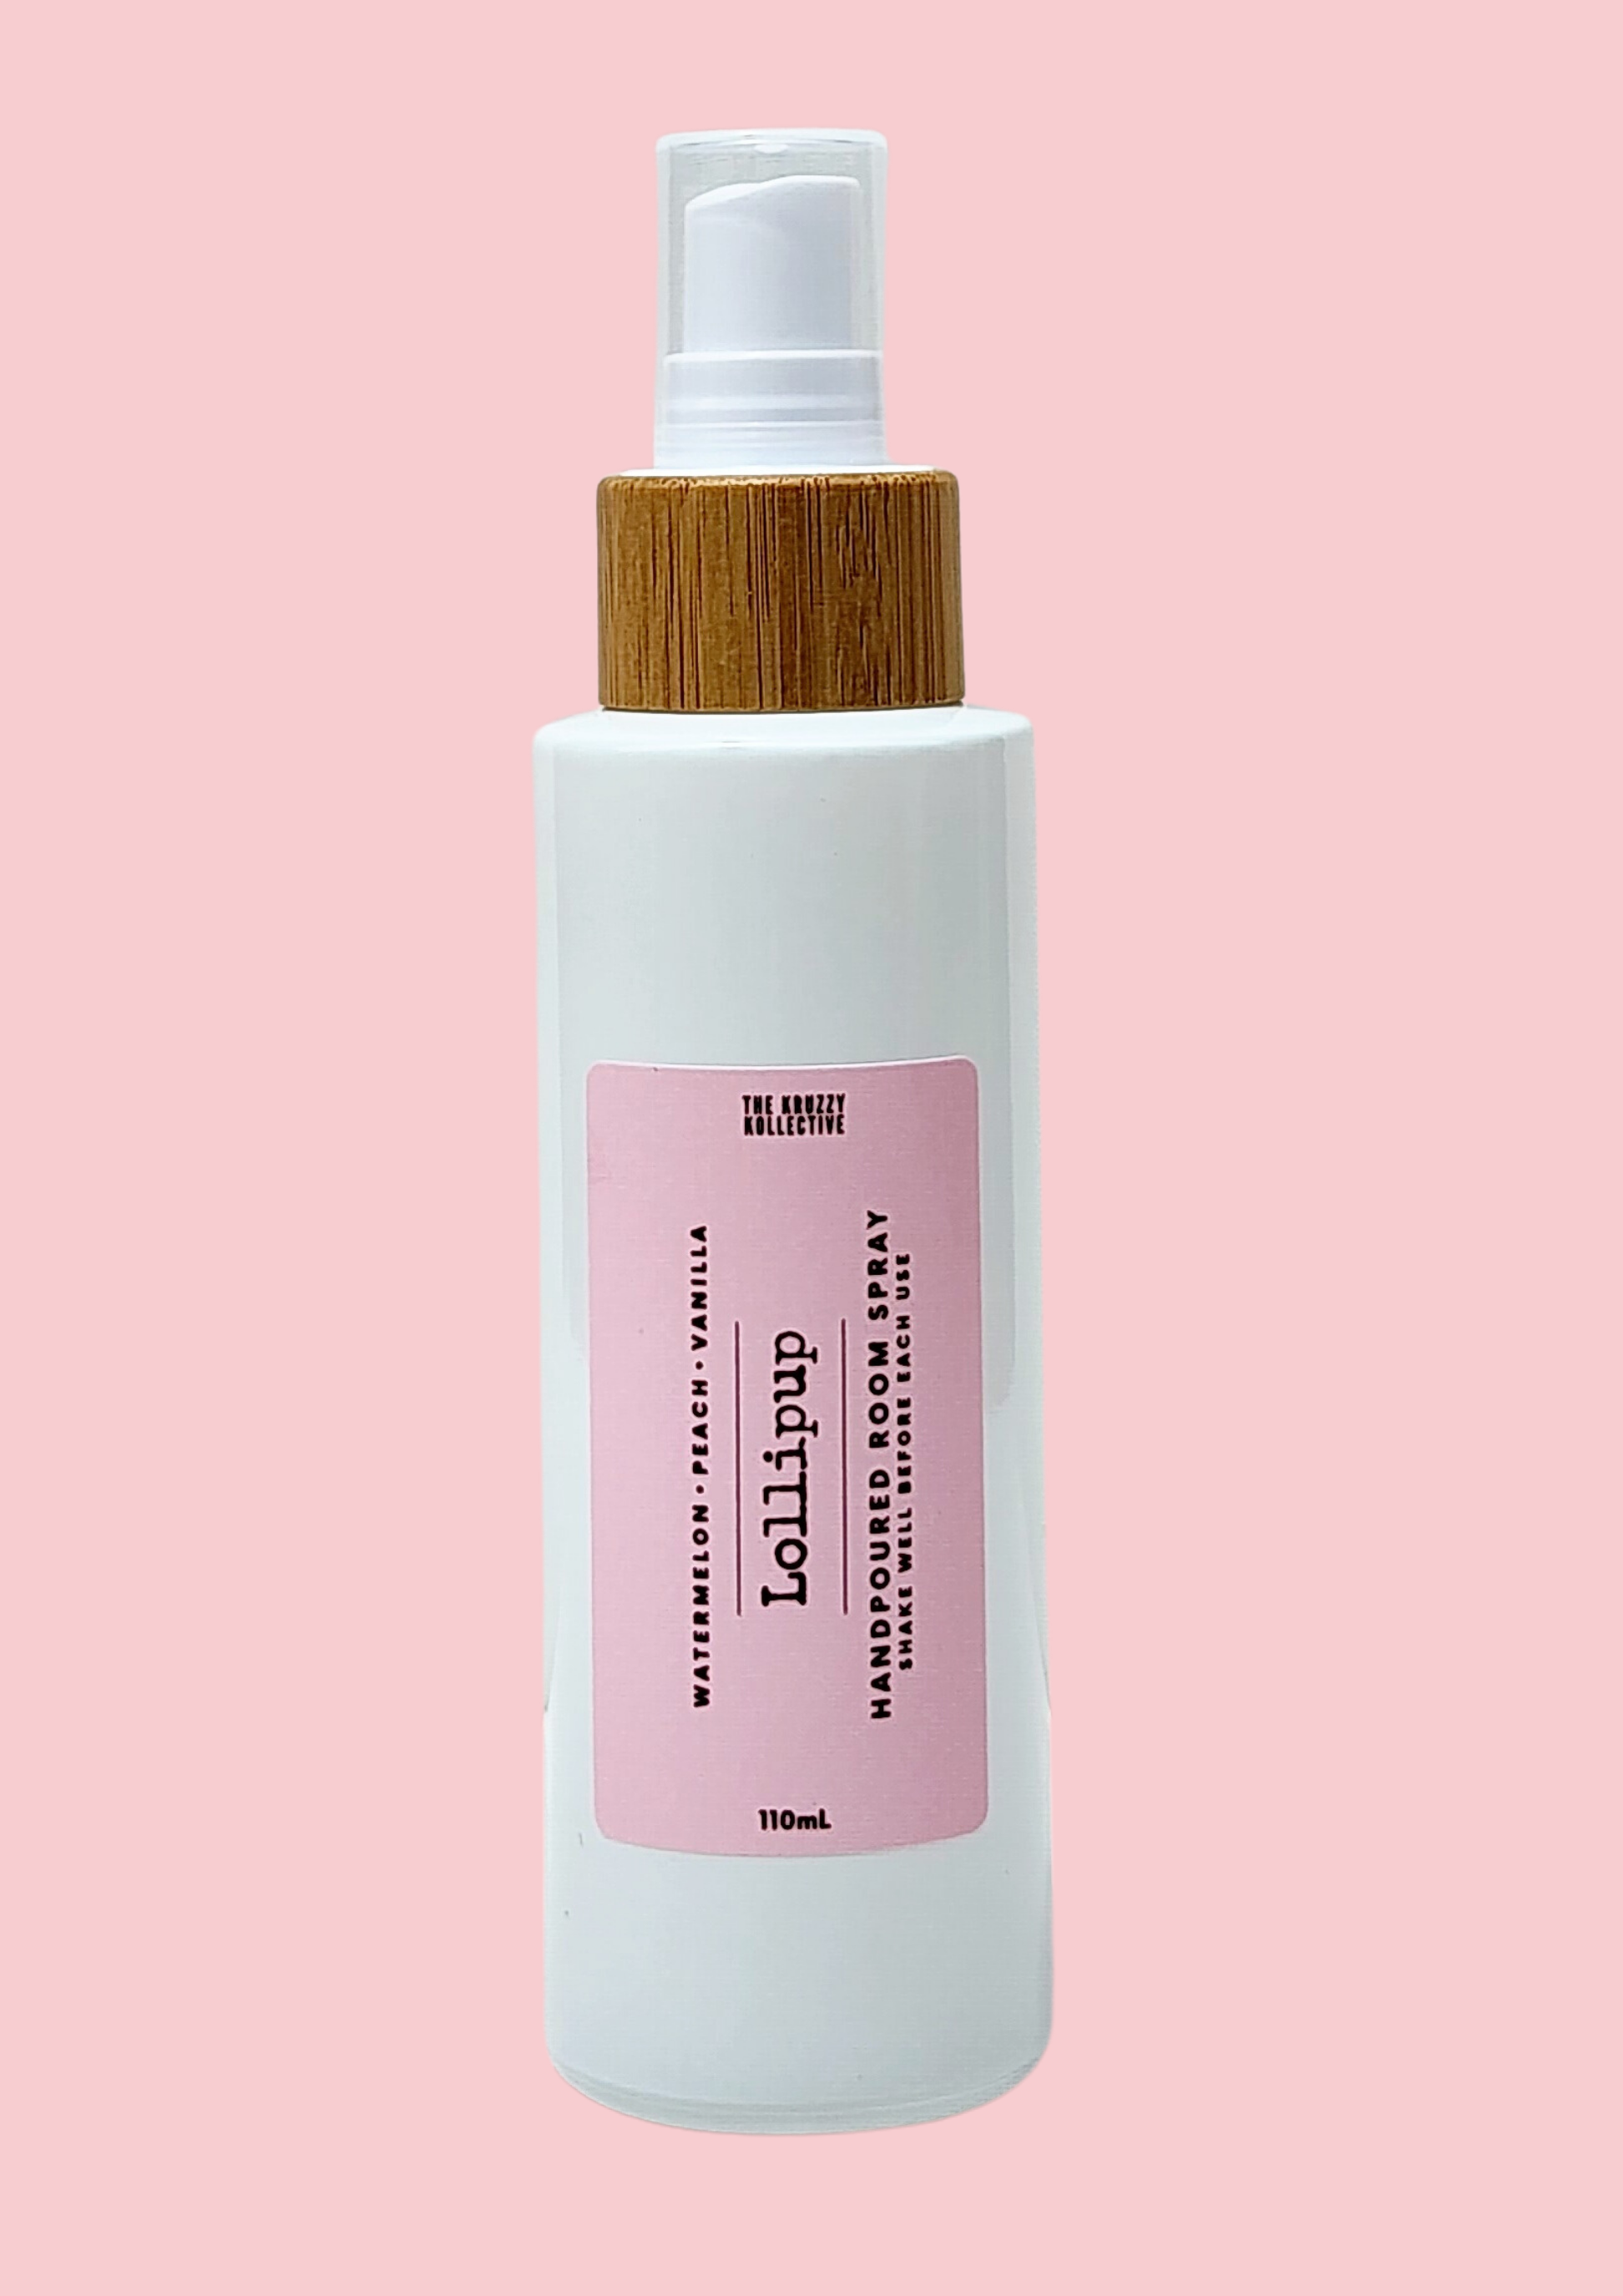 home fragrance spray odor eliminators eco friendly room freshener air freshener watermelon vanilla